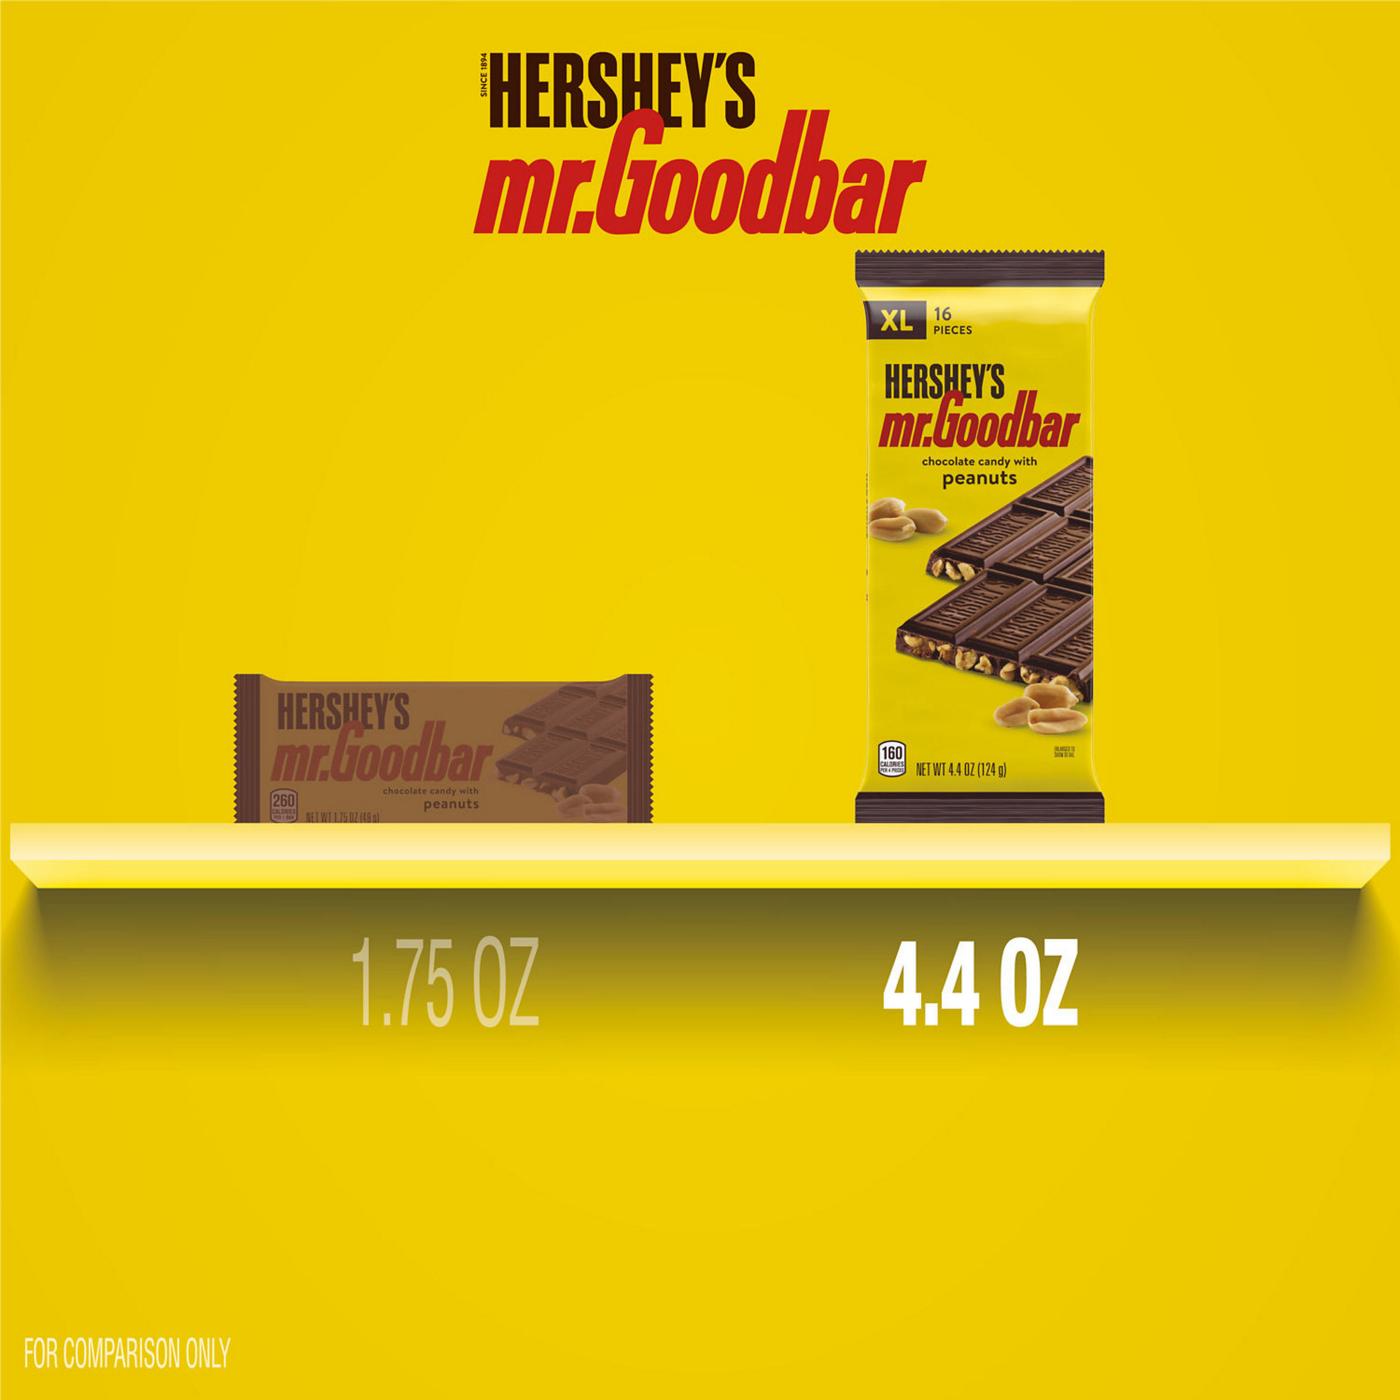 Hershey's Mr. Goodbar XL Chocolate Candy Bar, 16 pc; image 7 of 7